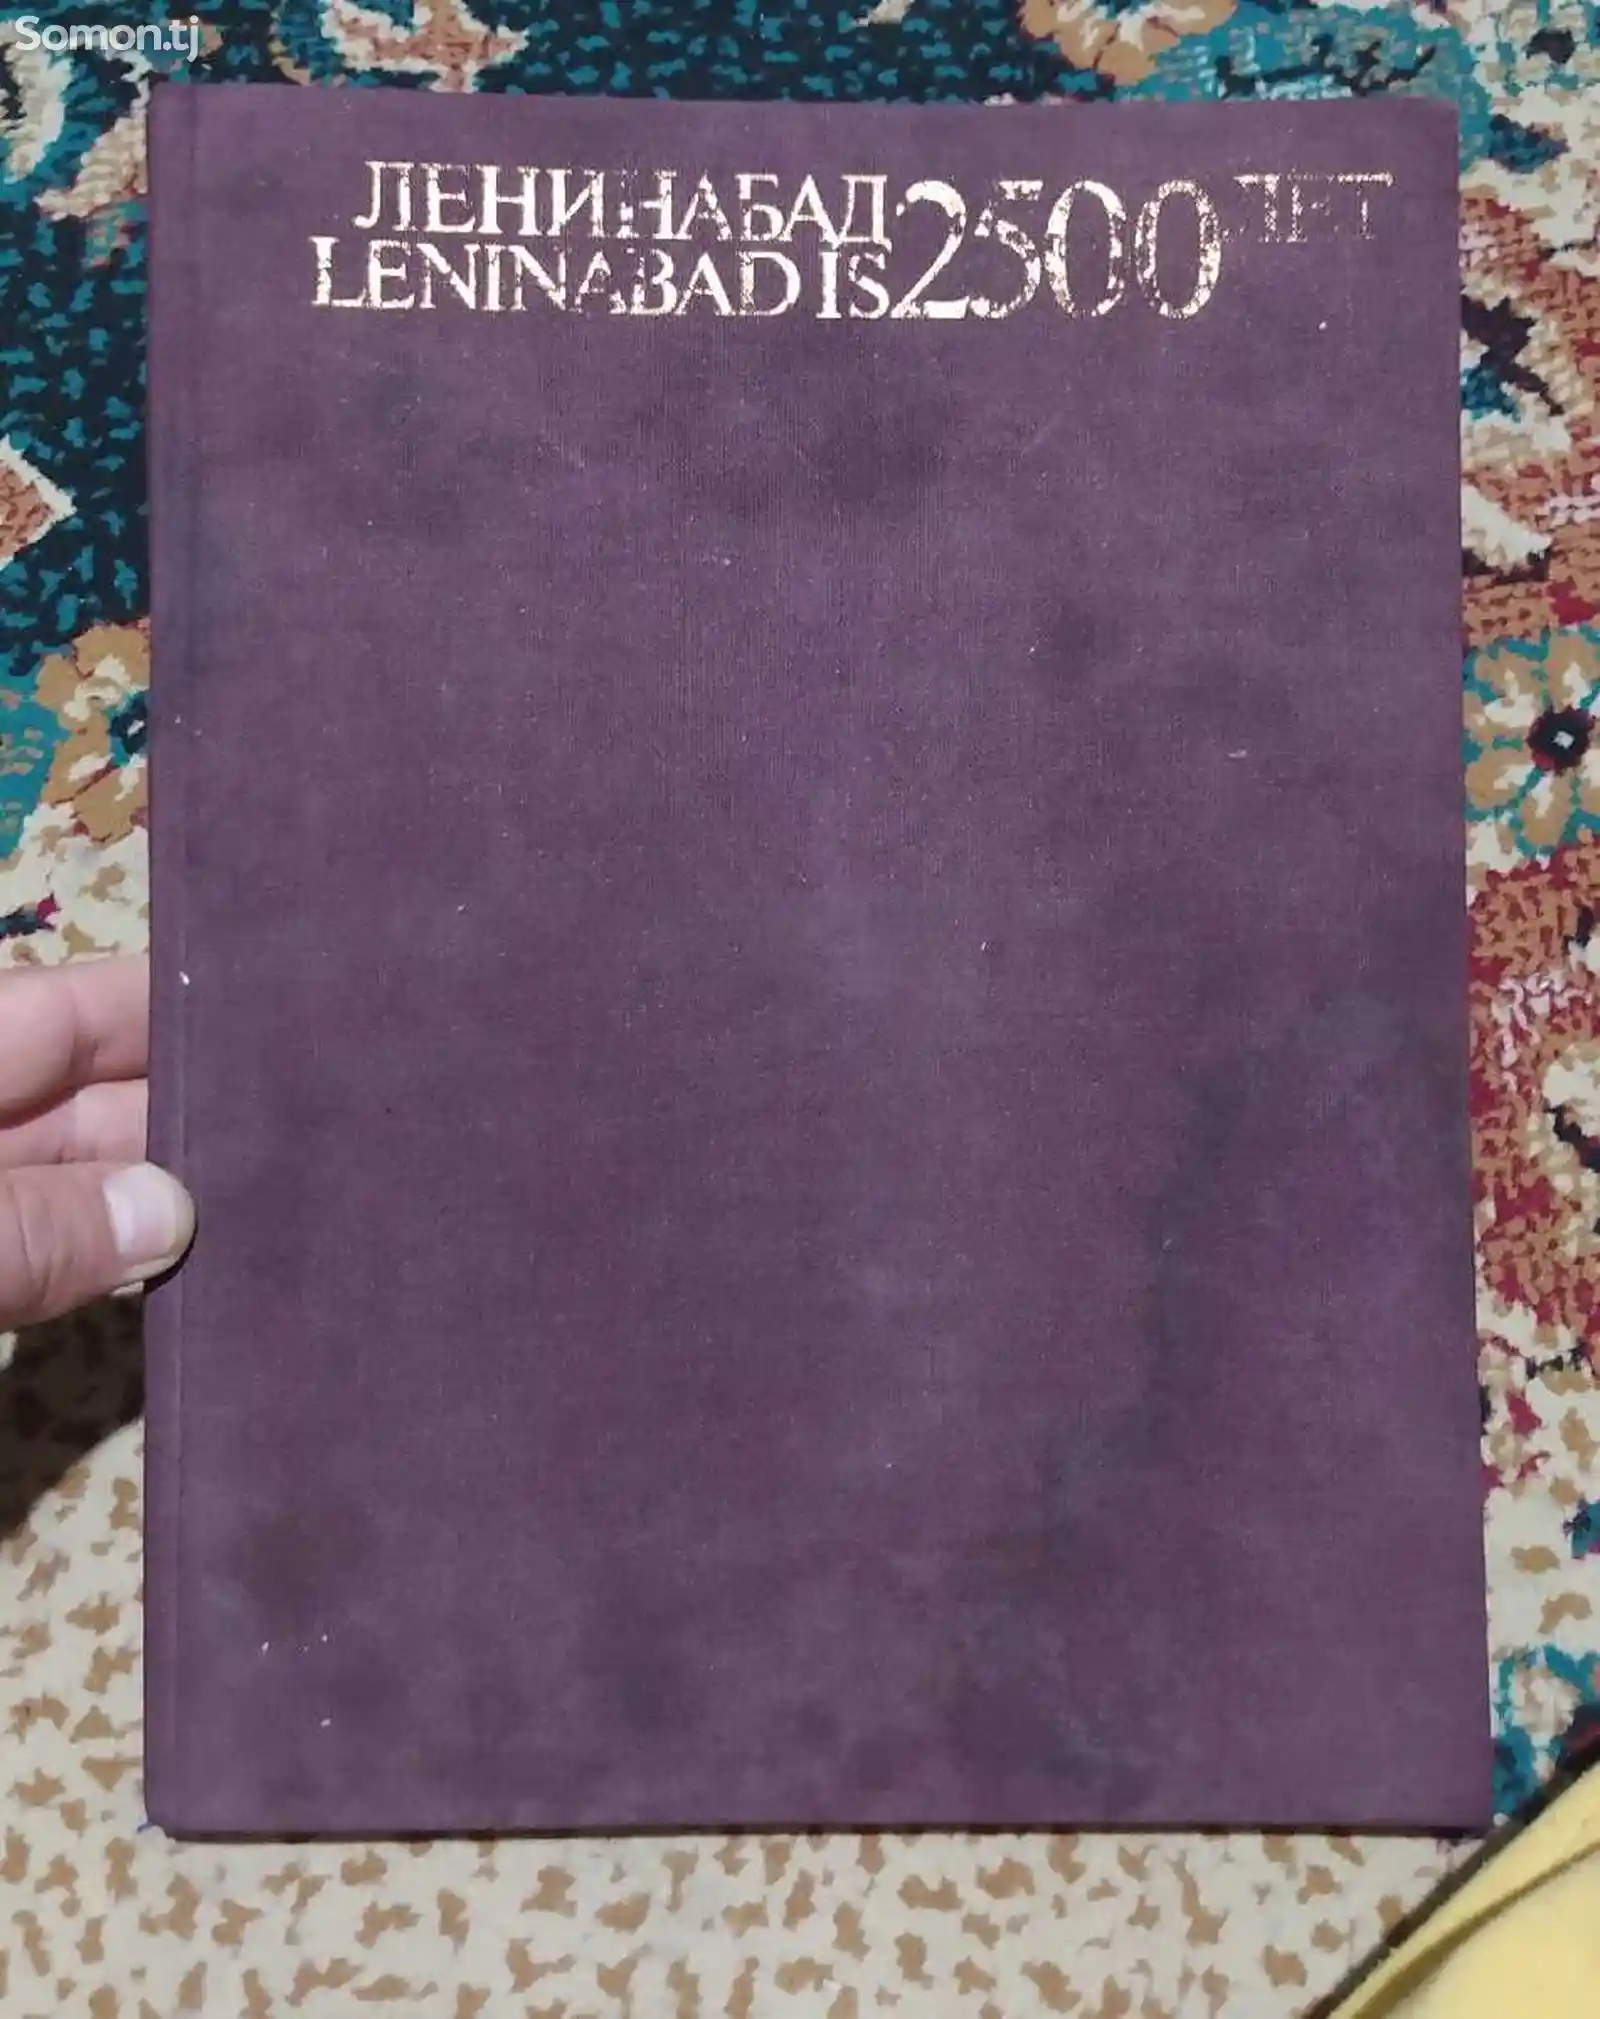 Книга Ленинабад 2500лет